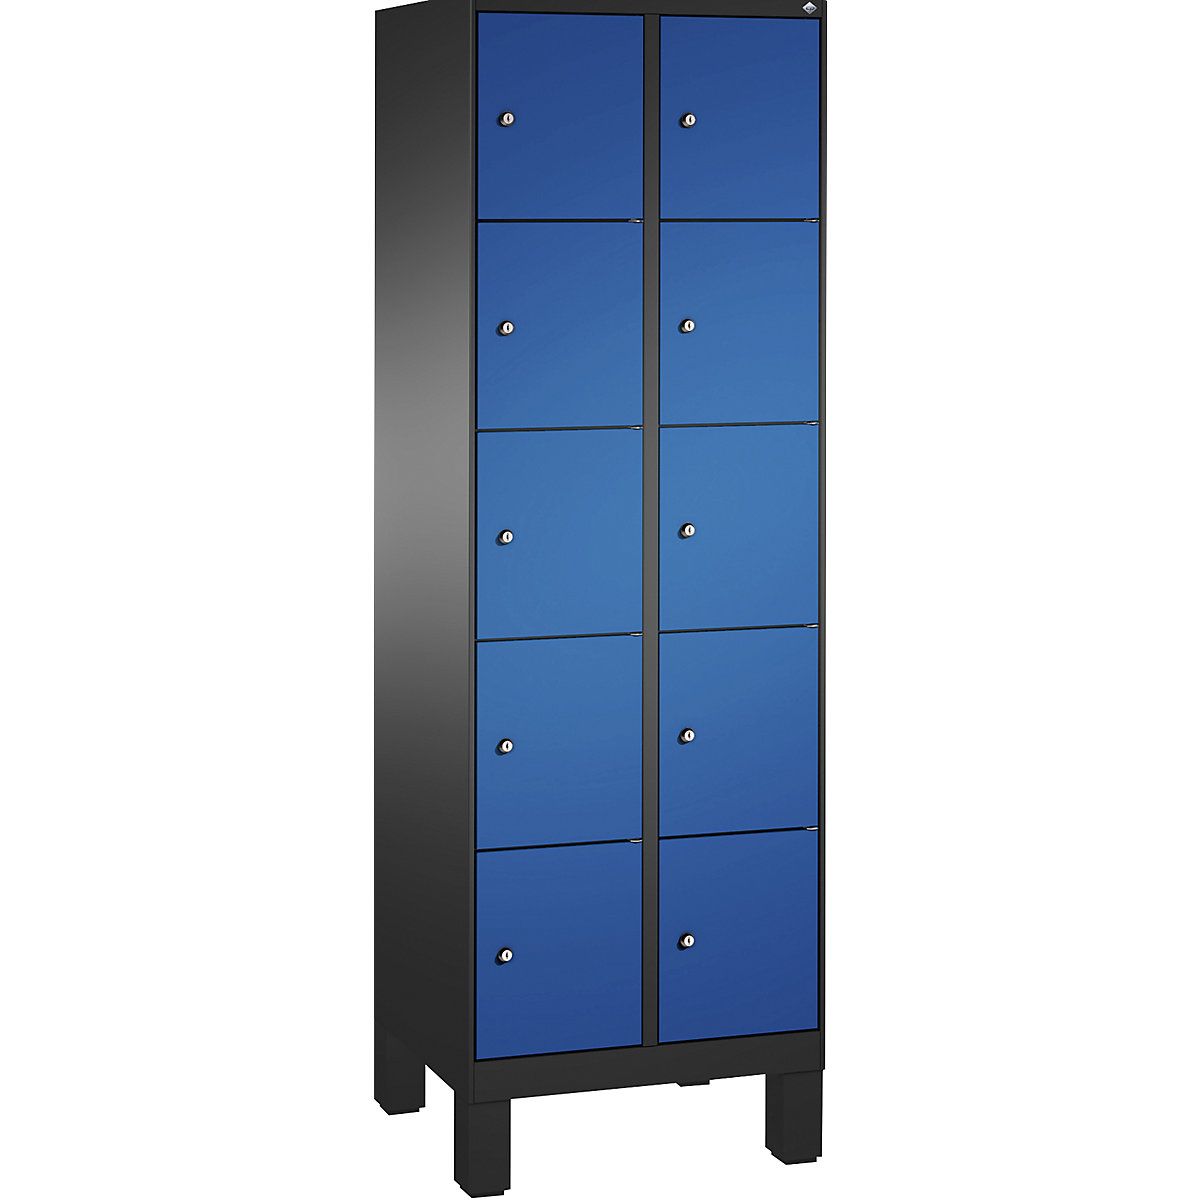 EVOLO locker unit, with feet – C+P, 2 compartments, 5 shelf compartments each, compartment width 300 mm, black grey / gentian blue-12